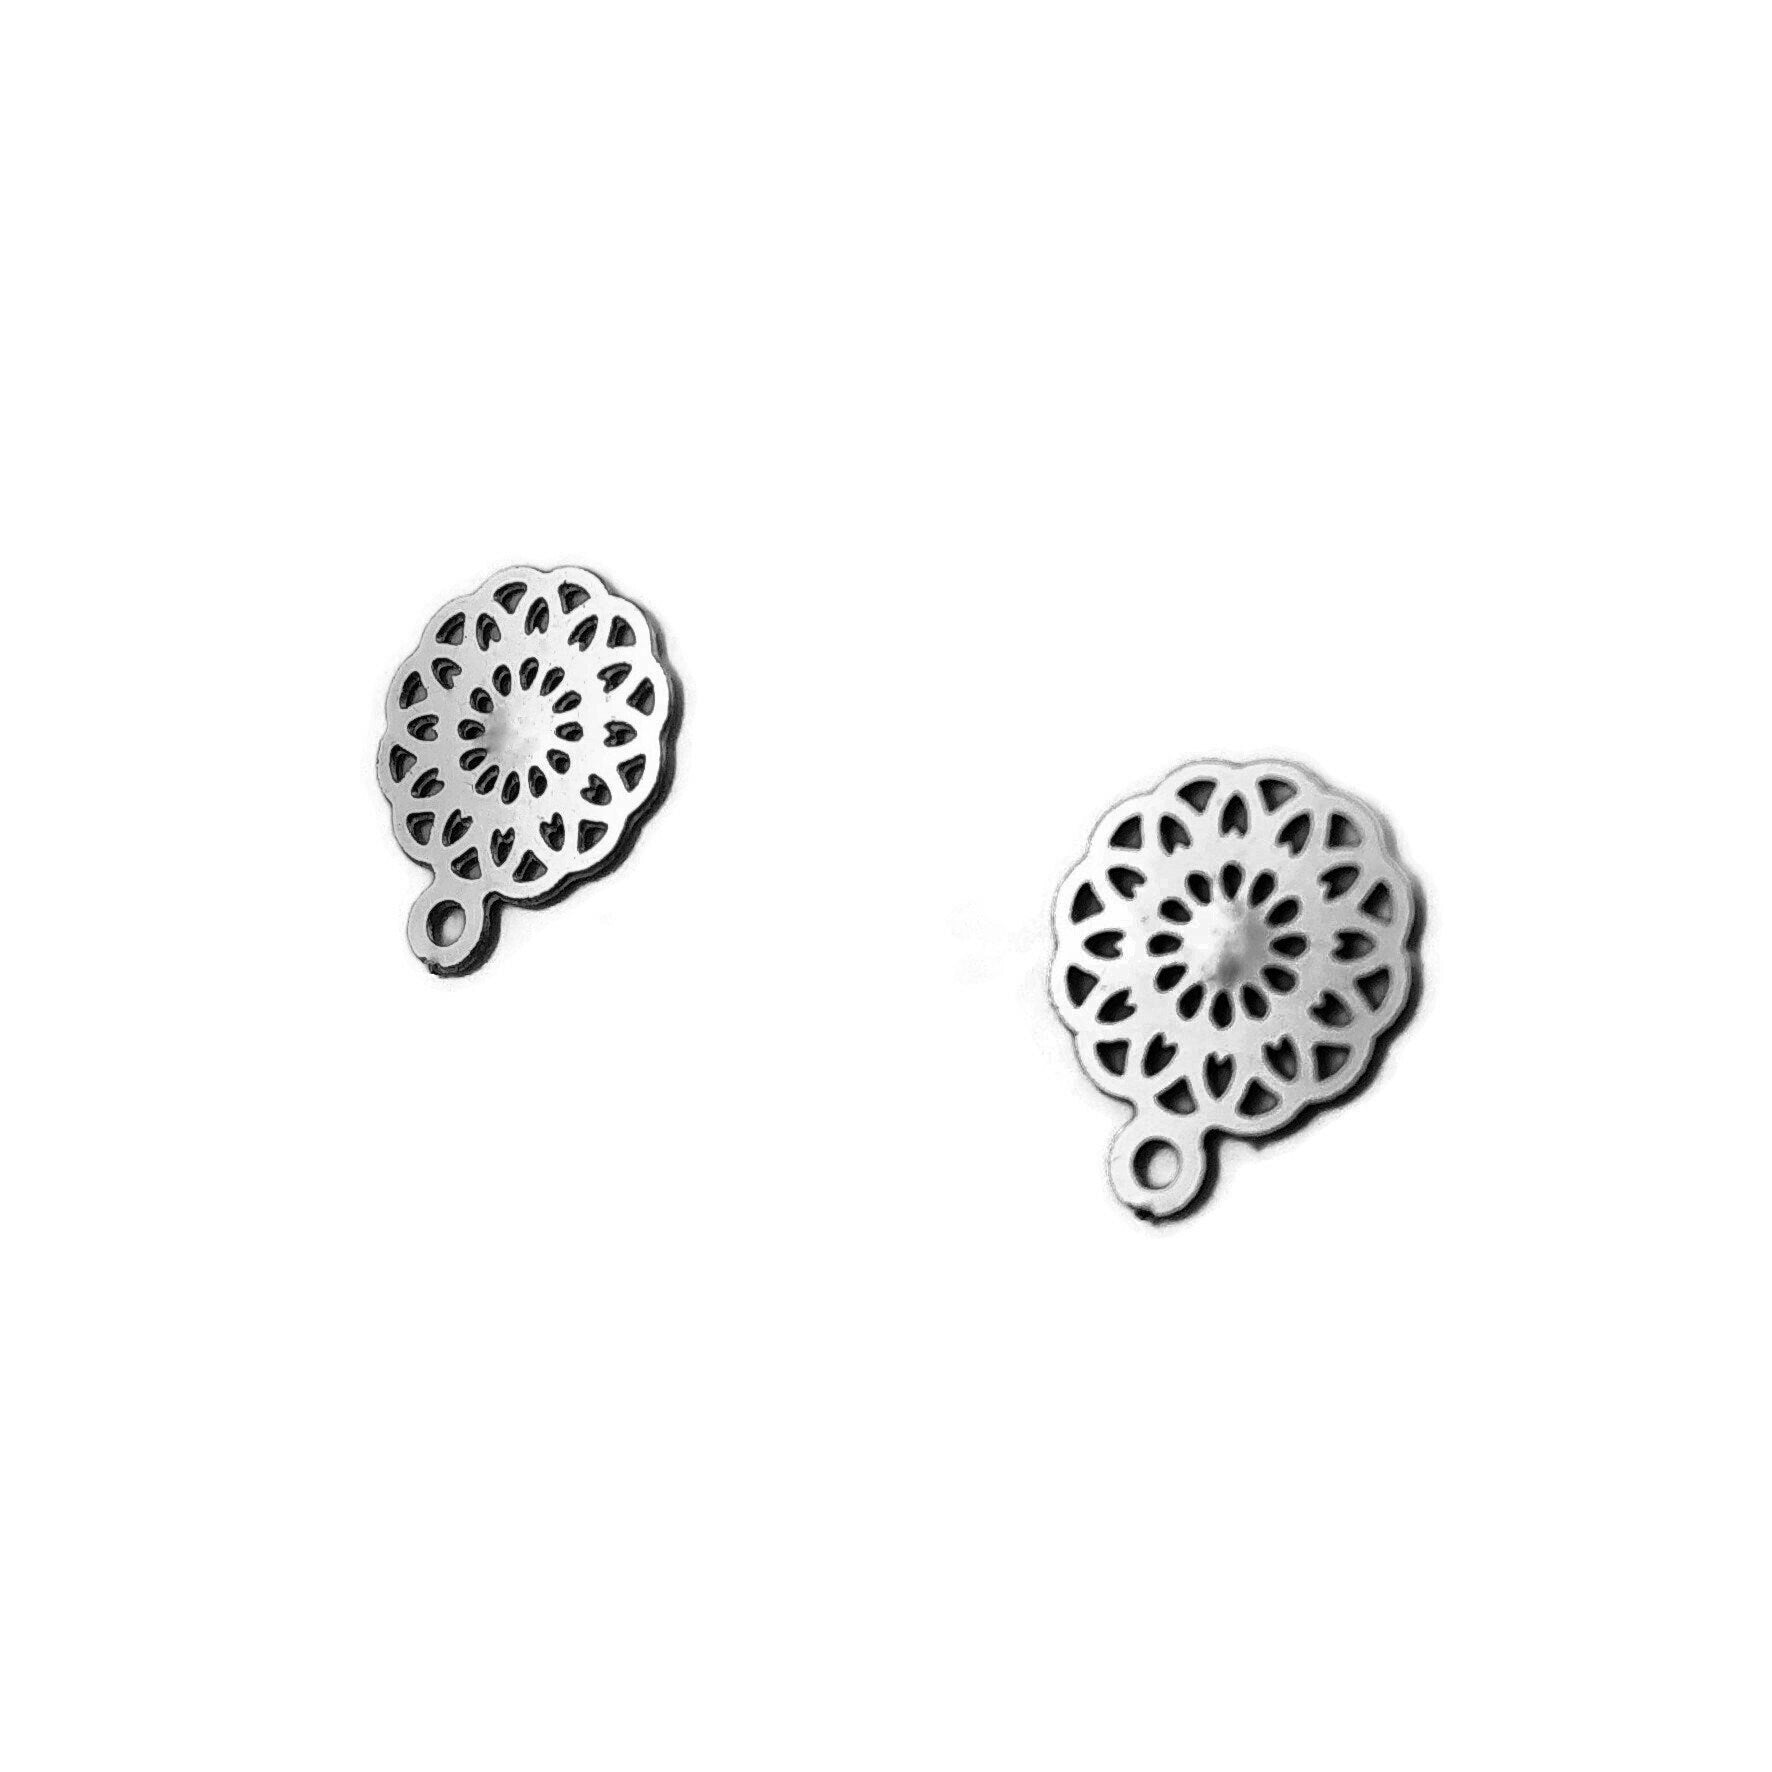 Filigree flower earring posts, 5 pairs stainless steel studs with loop, Hypoallergenic jewelry findings